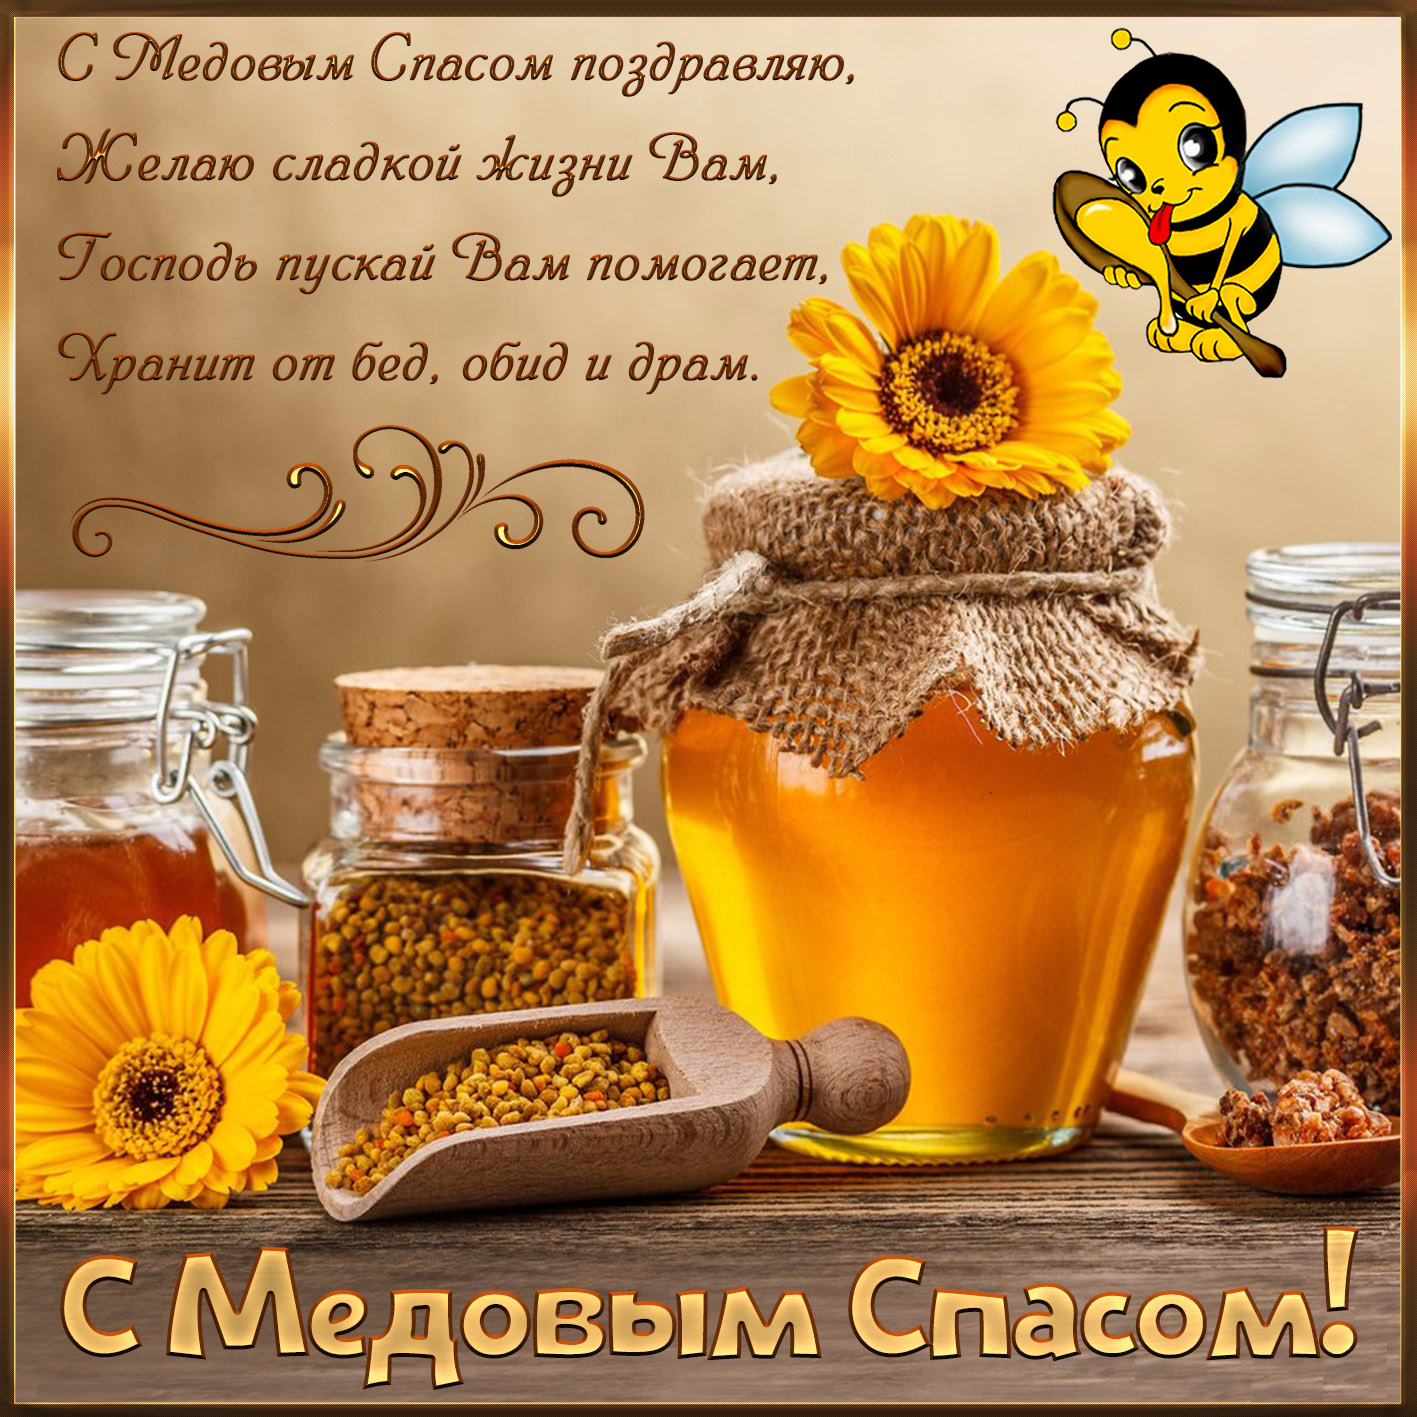 Картинка с баночками мёда к Медовому Спасу